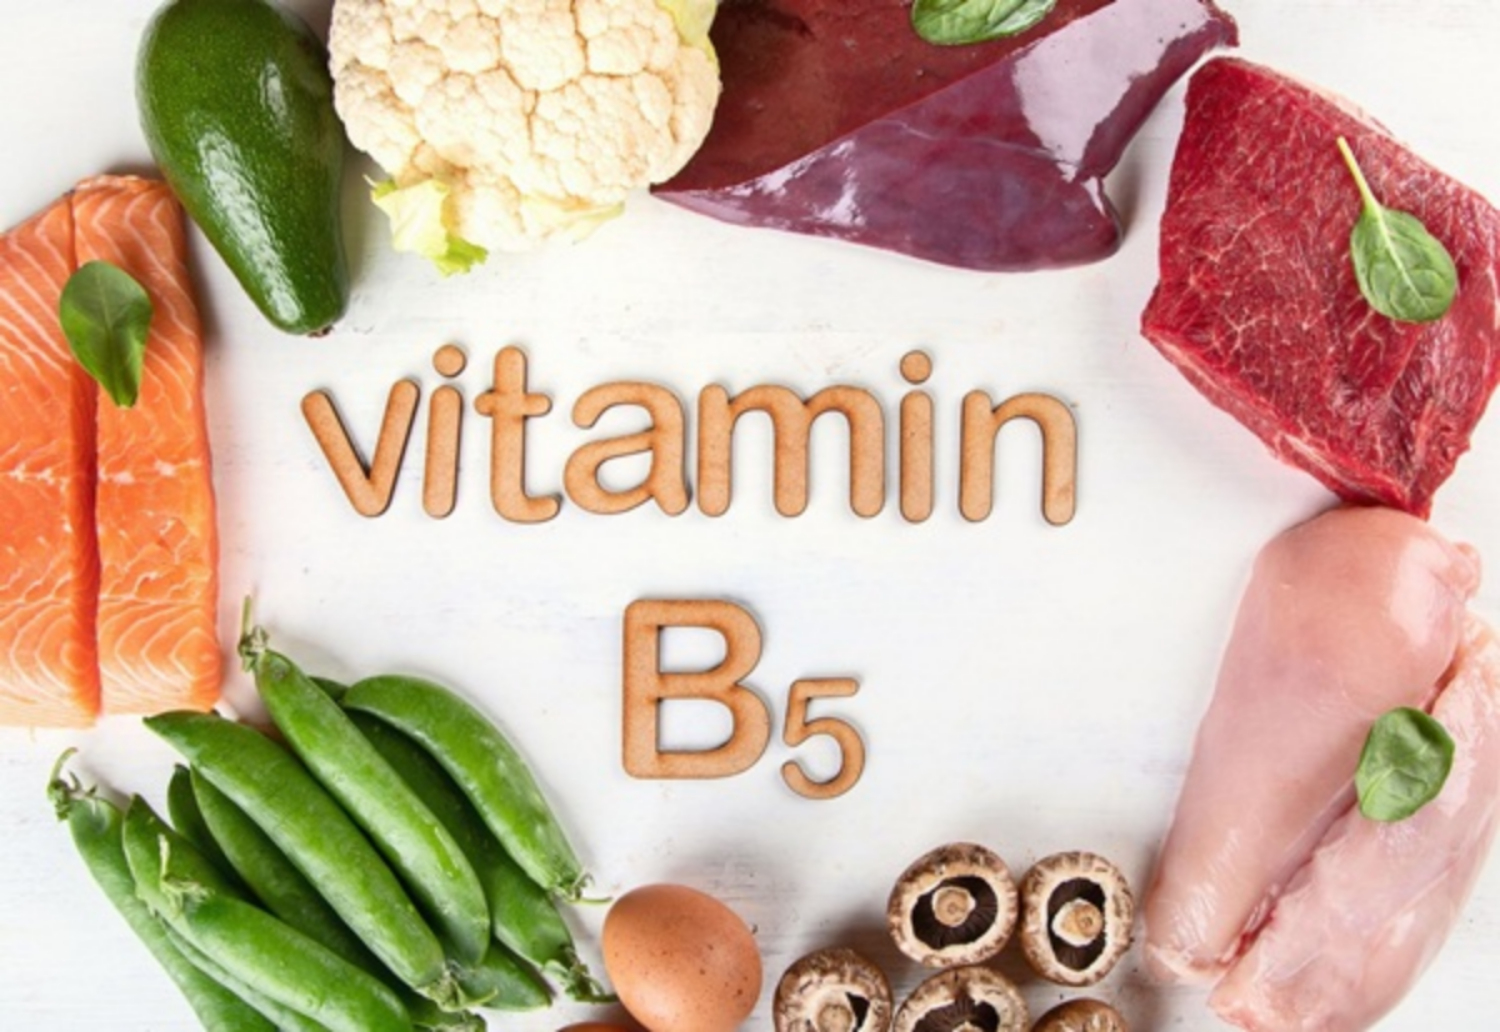 vitamin b5 co trong thuc pham nao 1